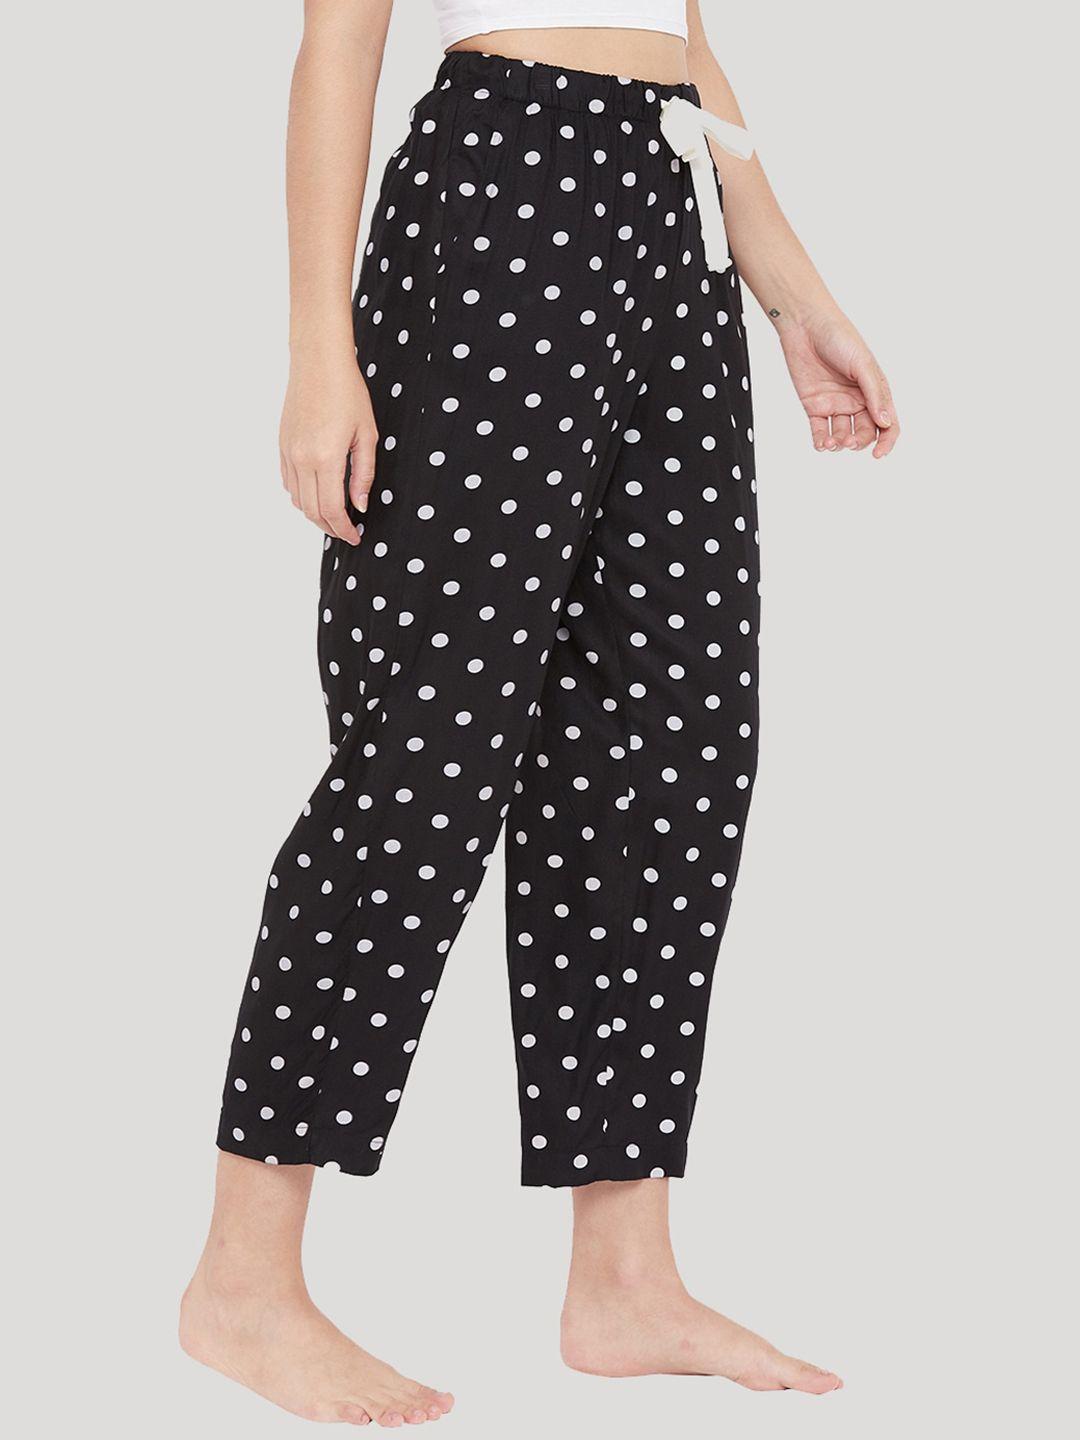 style shoes women black and white polka dot cotton lounge pants